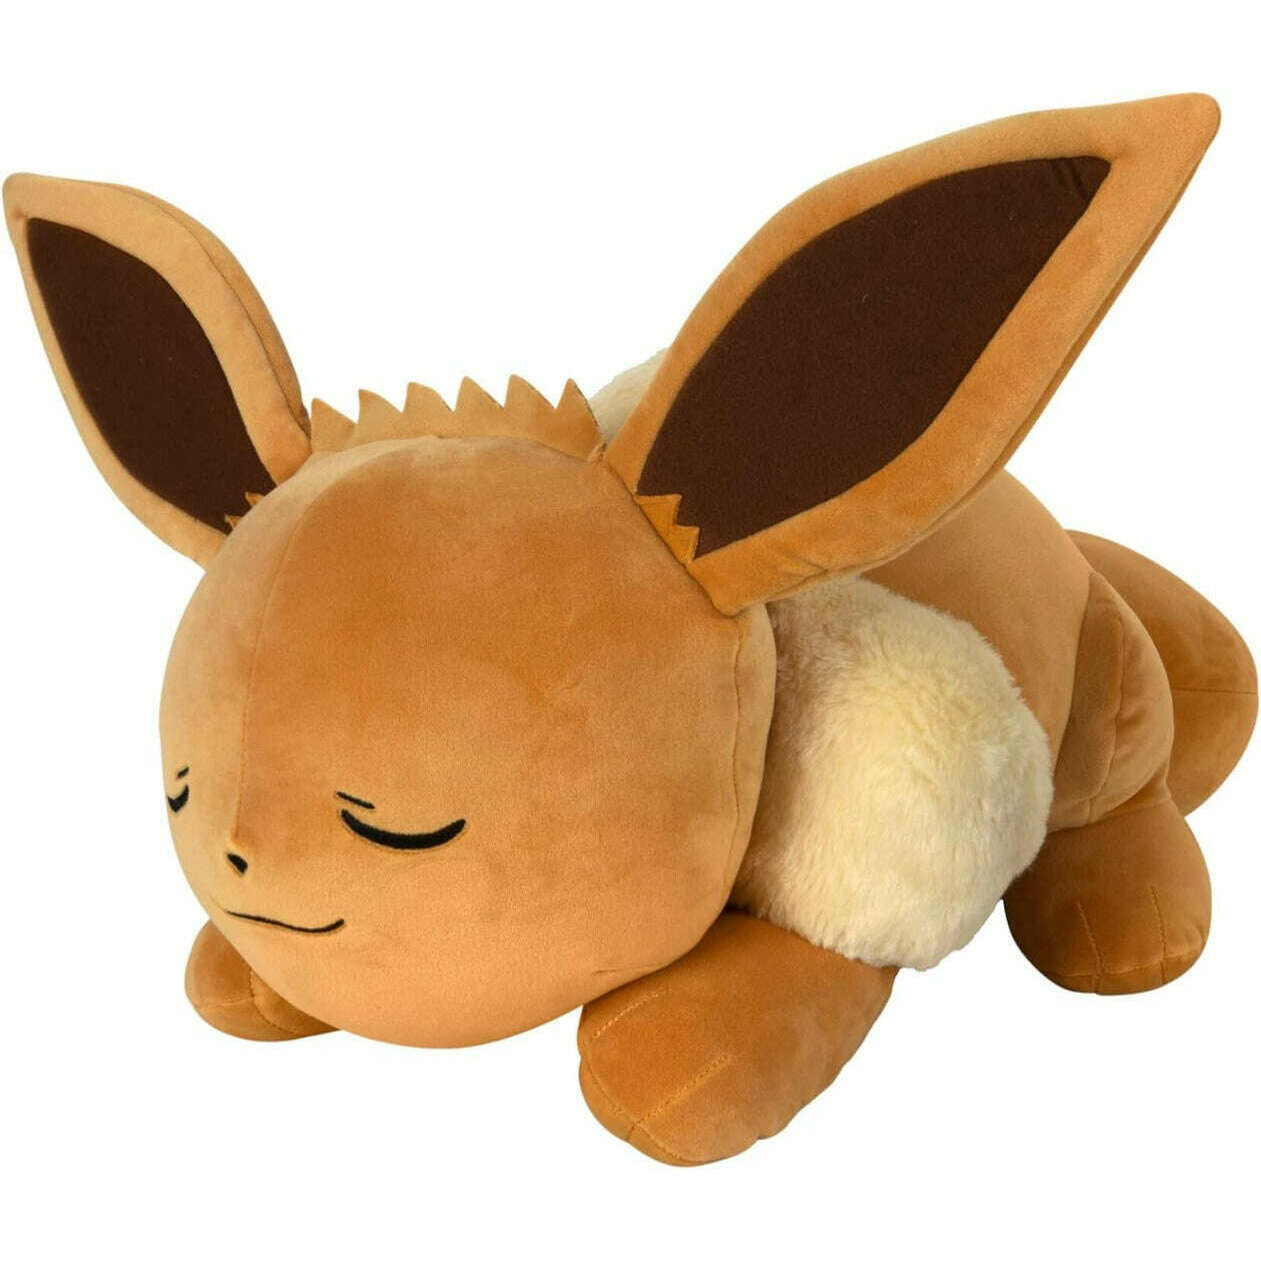 Toys N Tuck:Pokemon 18 Inch Plush - Sleeping Eevee,Pokemon